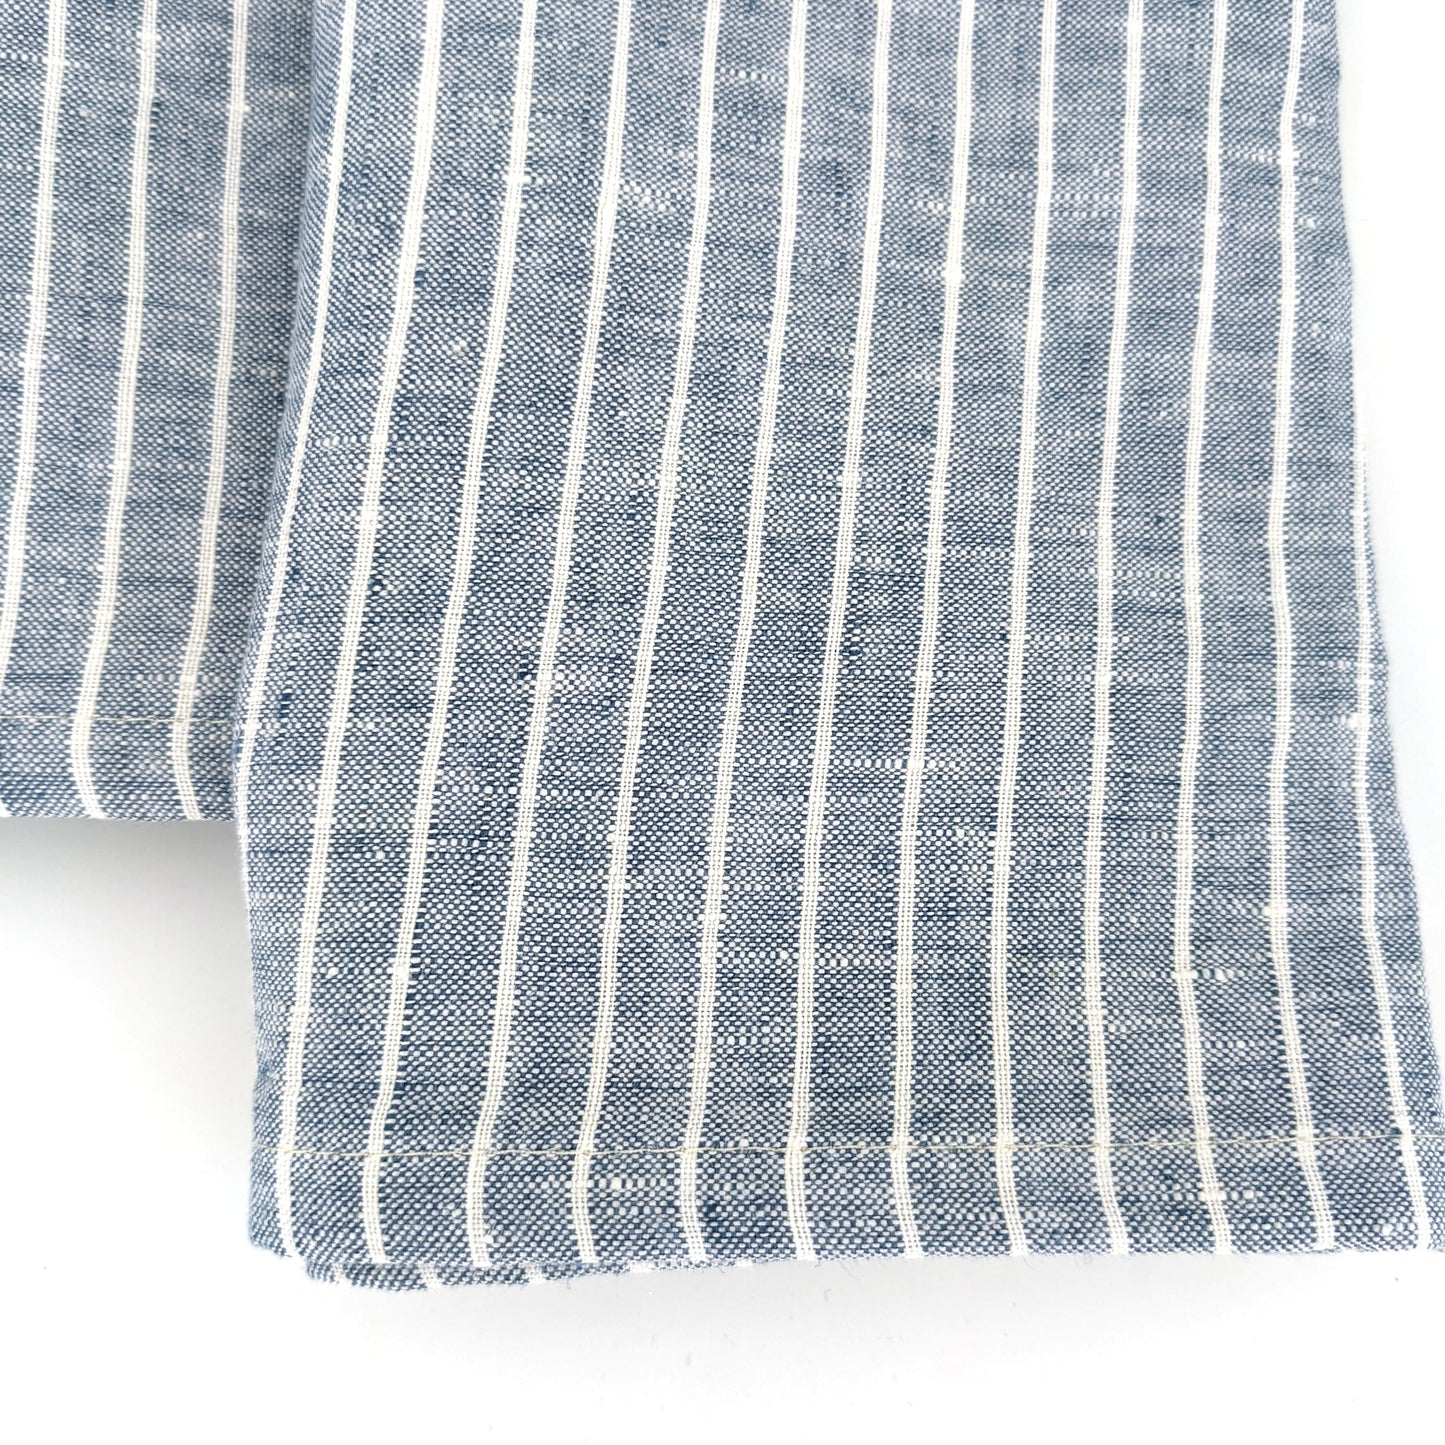 Set of 4 Striped napkins - French blue - French Address